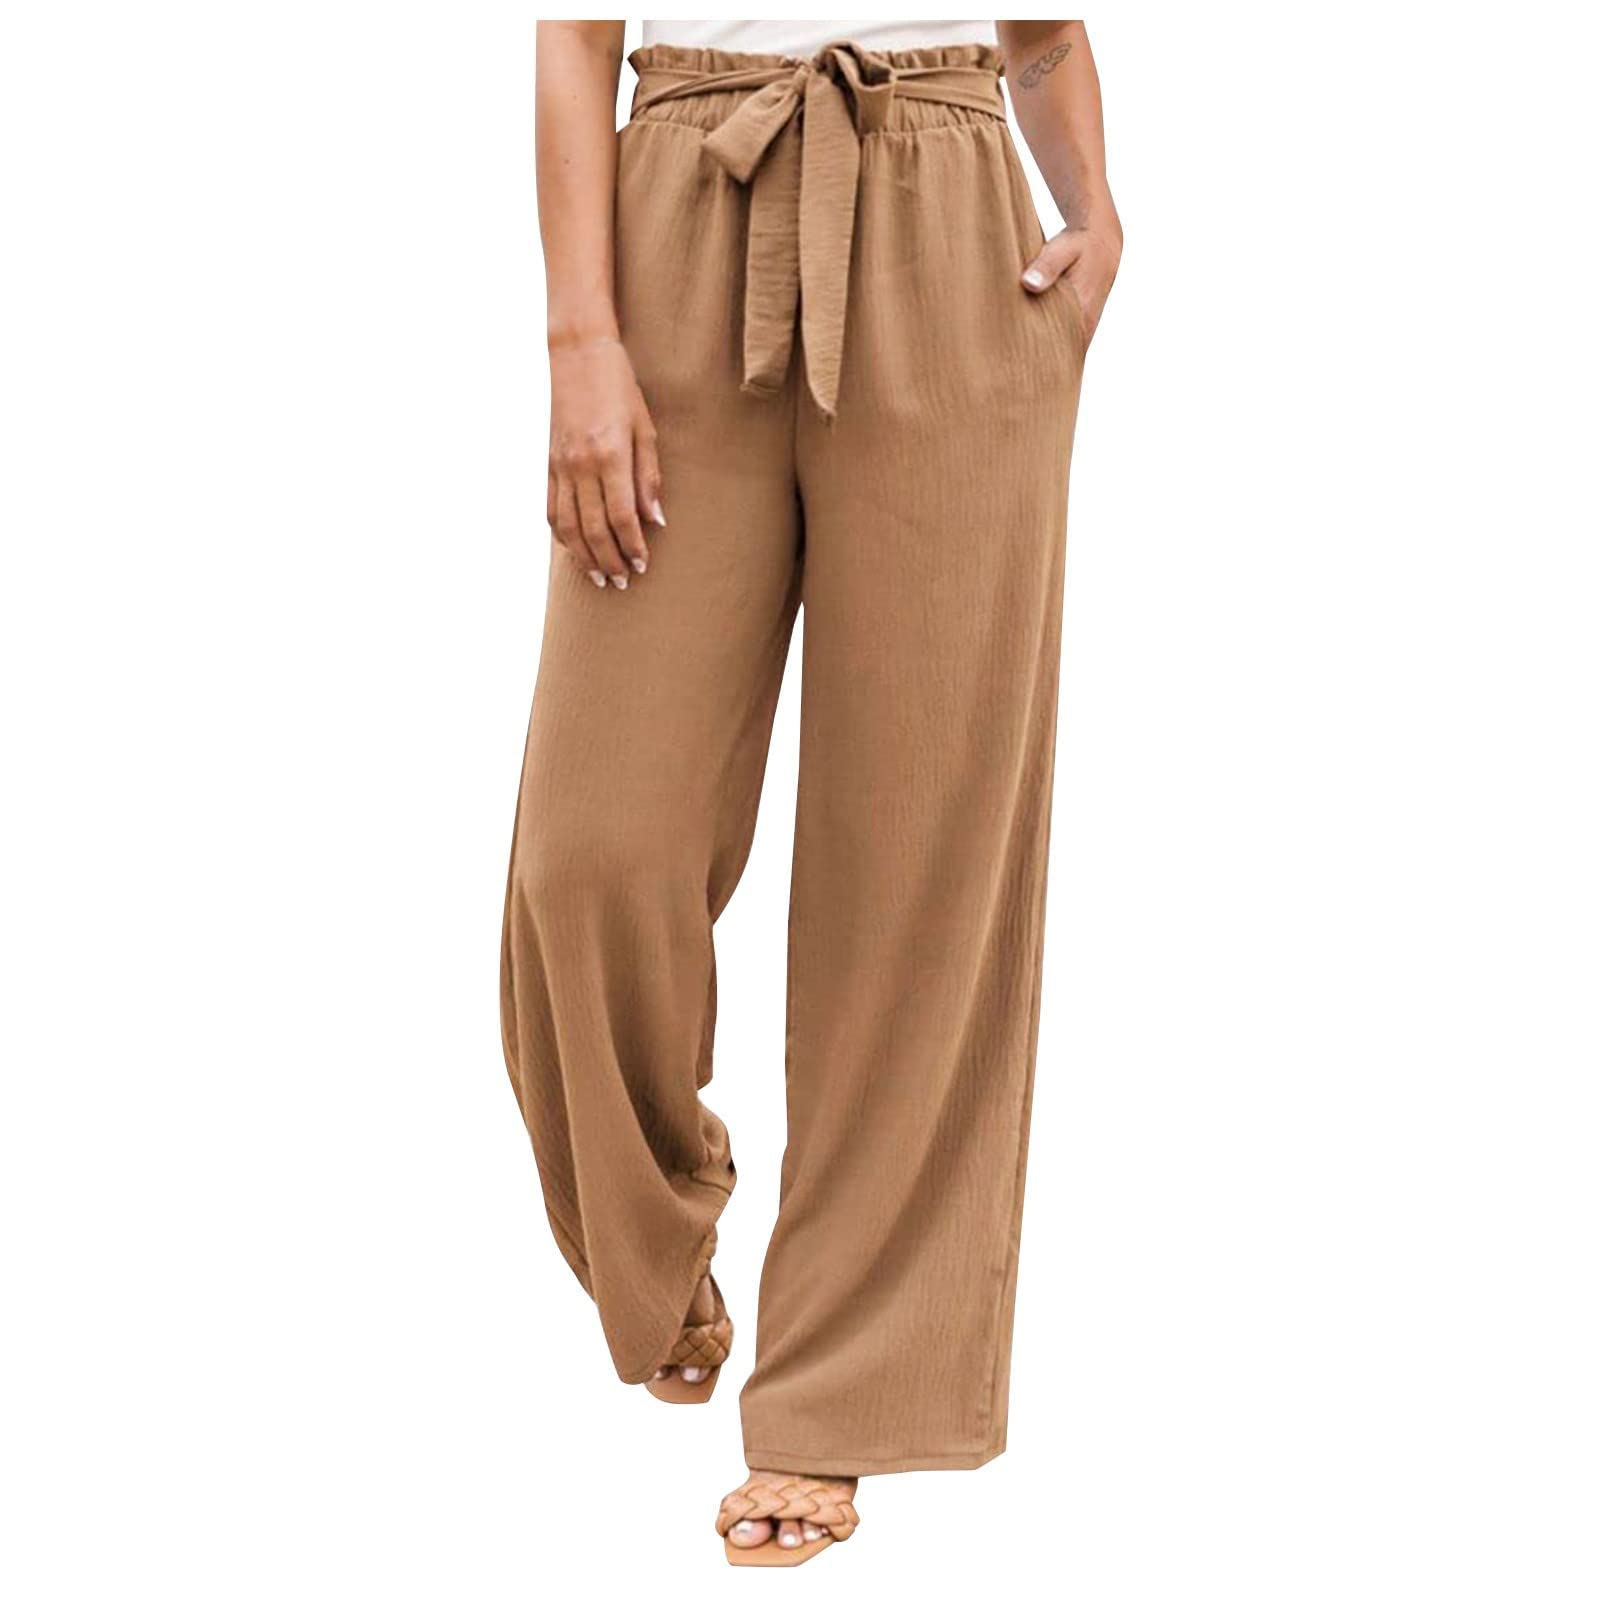 Boho Smocked Pants for Women Cotton Linen Pants Casual Printed